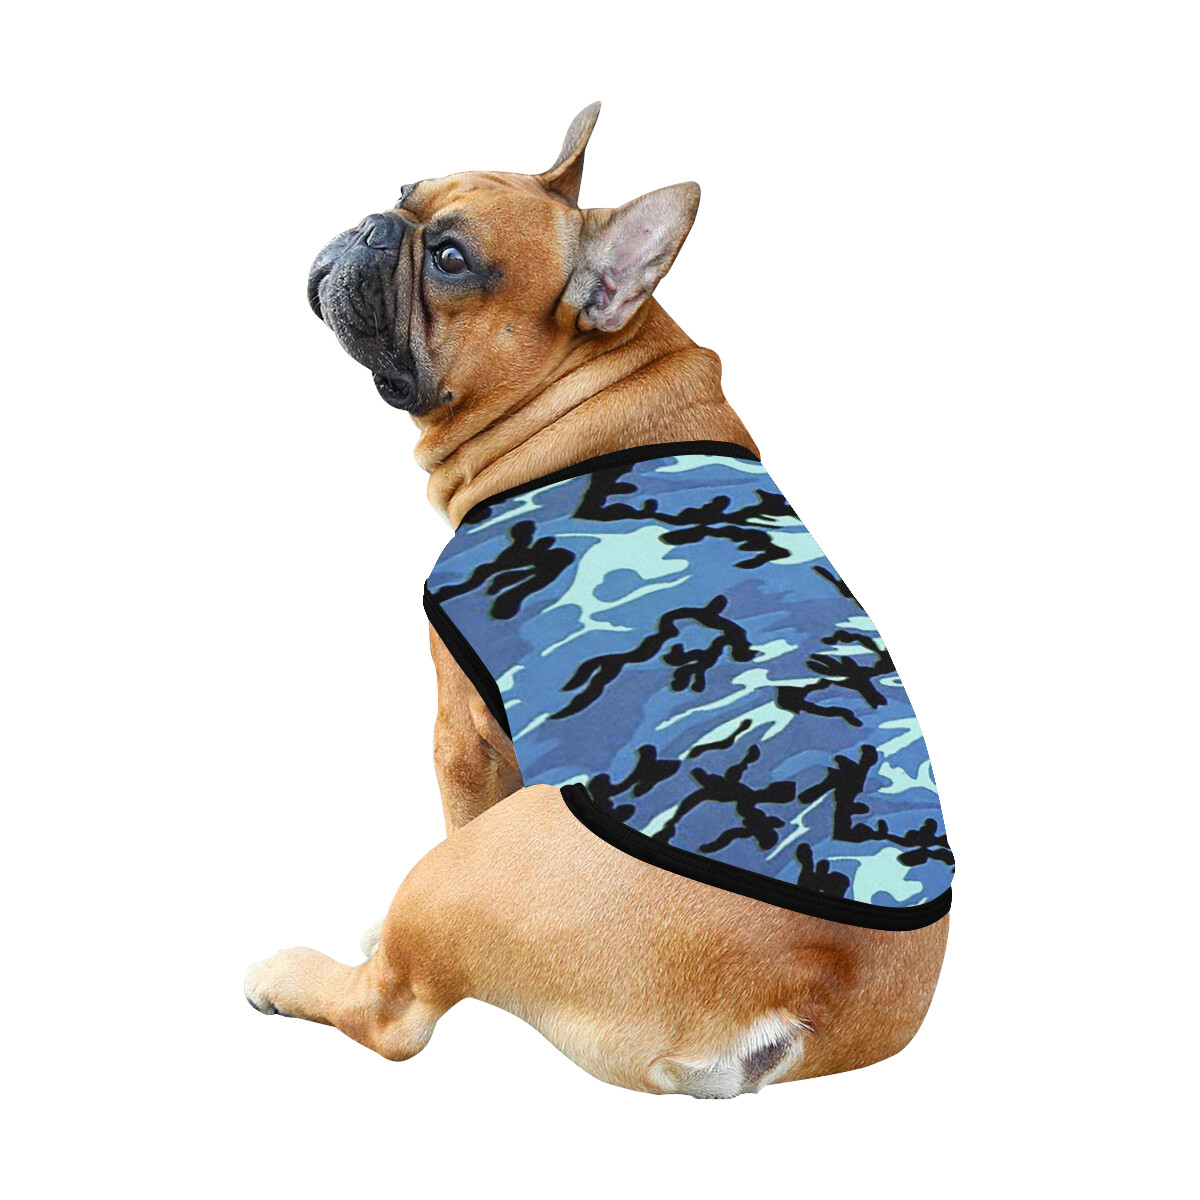 🐕 Camo Army Dog shirt Dog Tank Top, Dog shirt, Dog clothes, Gifts, front back print, 7 sizes XS to 3XL, dog t-shirt, dog gift, light blue